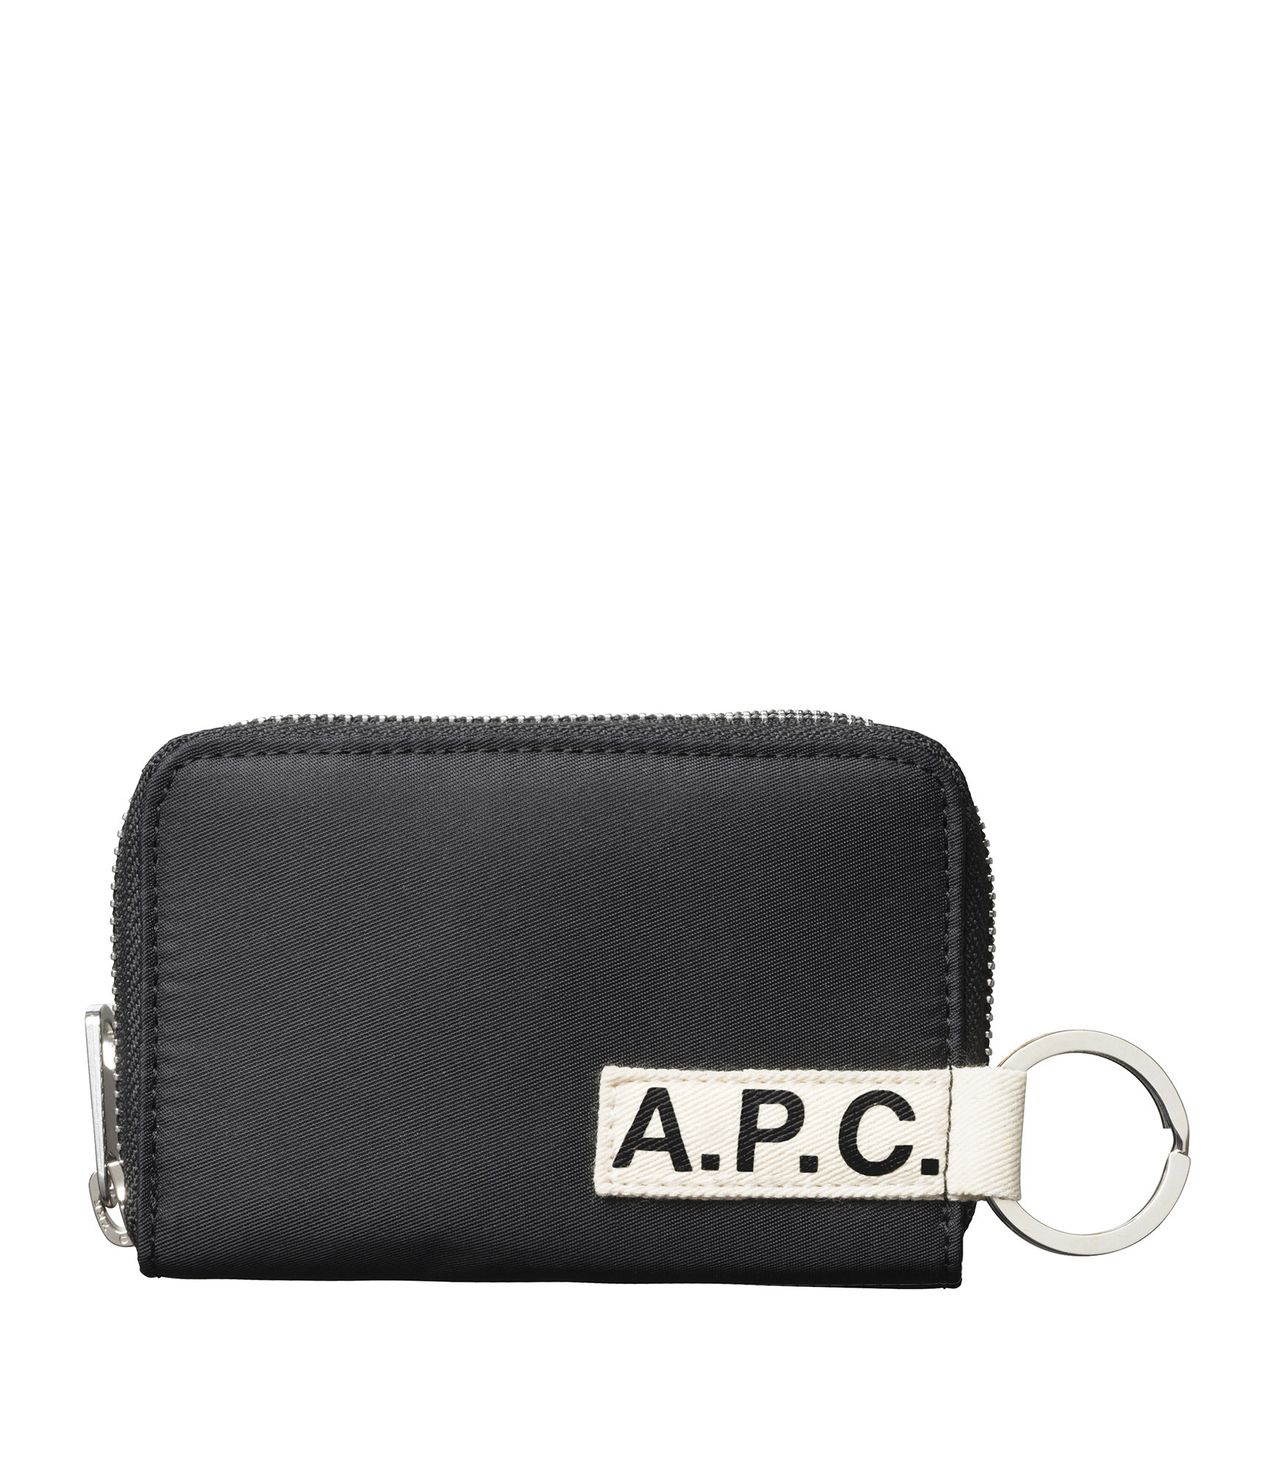 Godot compact wallet BLACK APC